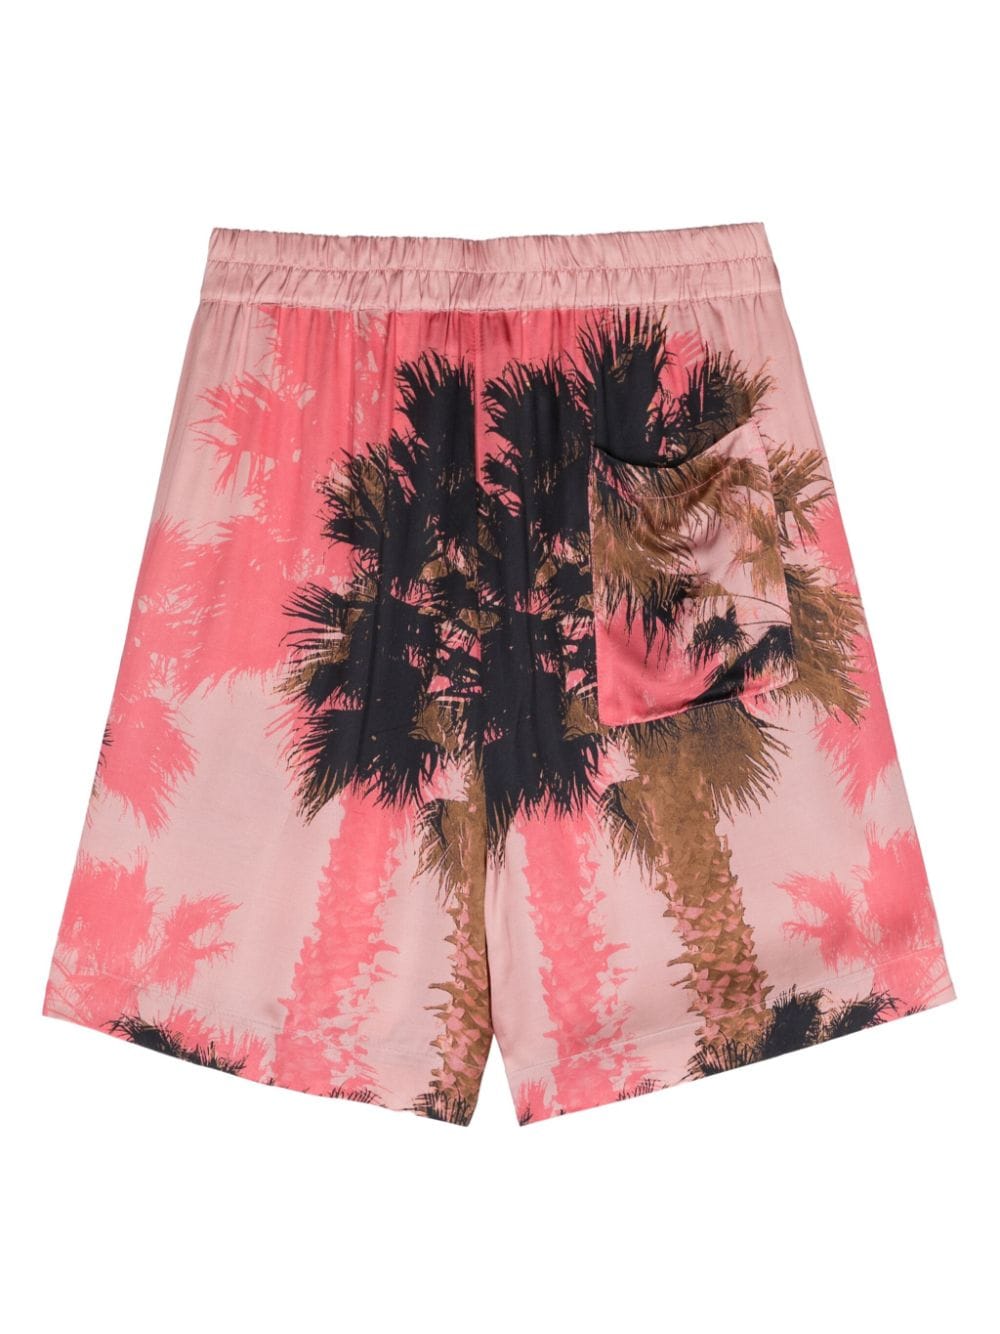 Palm print pink shorts